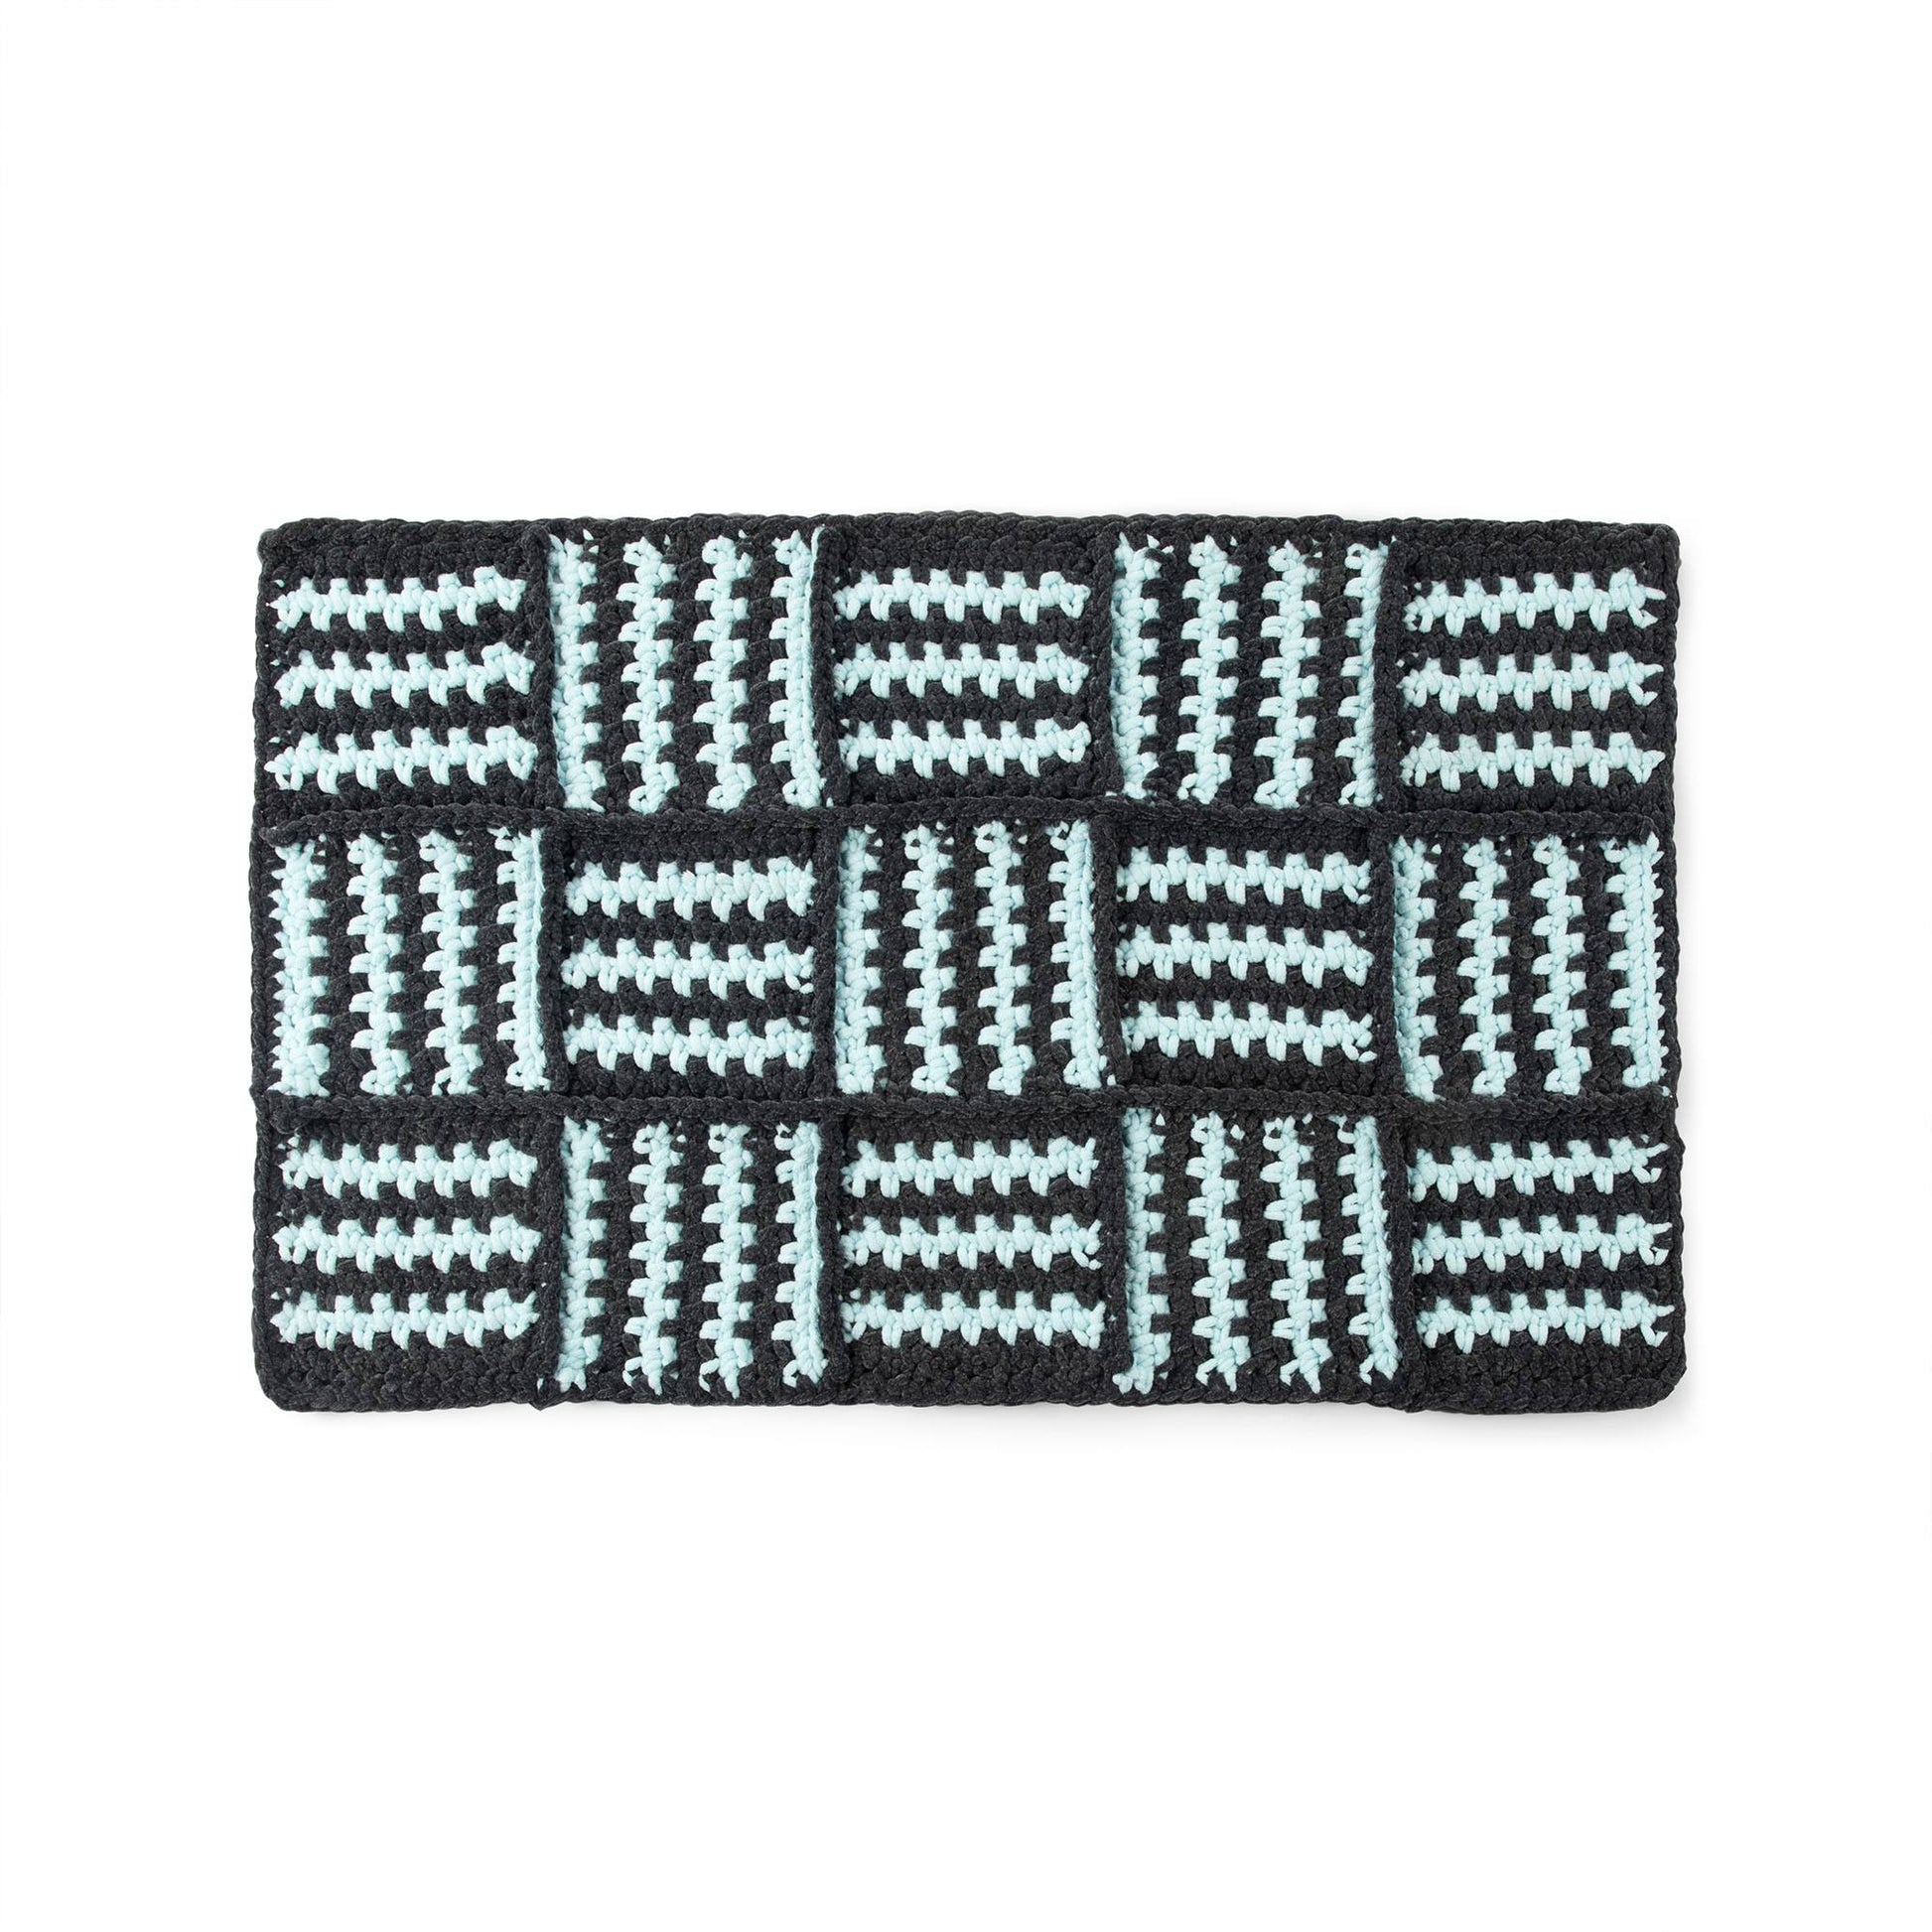 Free Bernat Crochet Moss Stitch Squares Rug Pattern